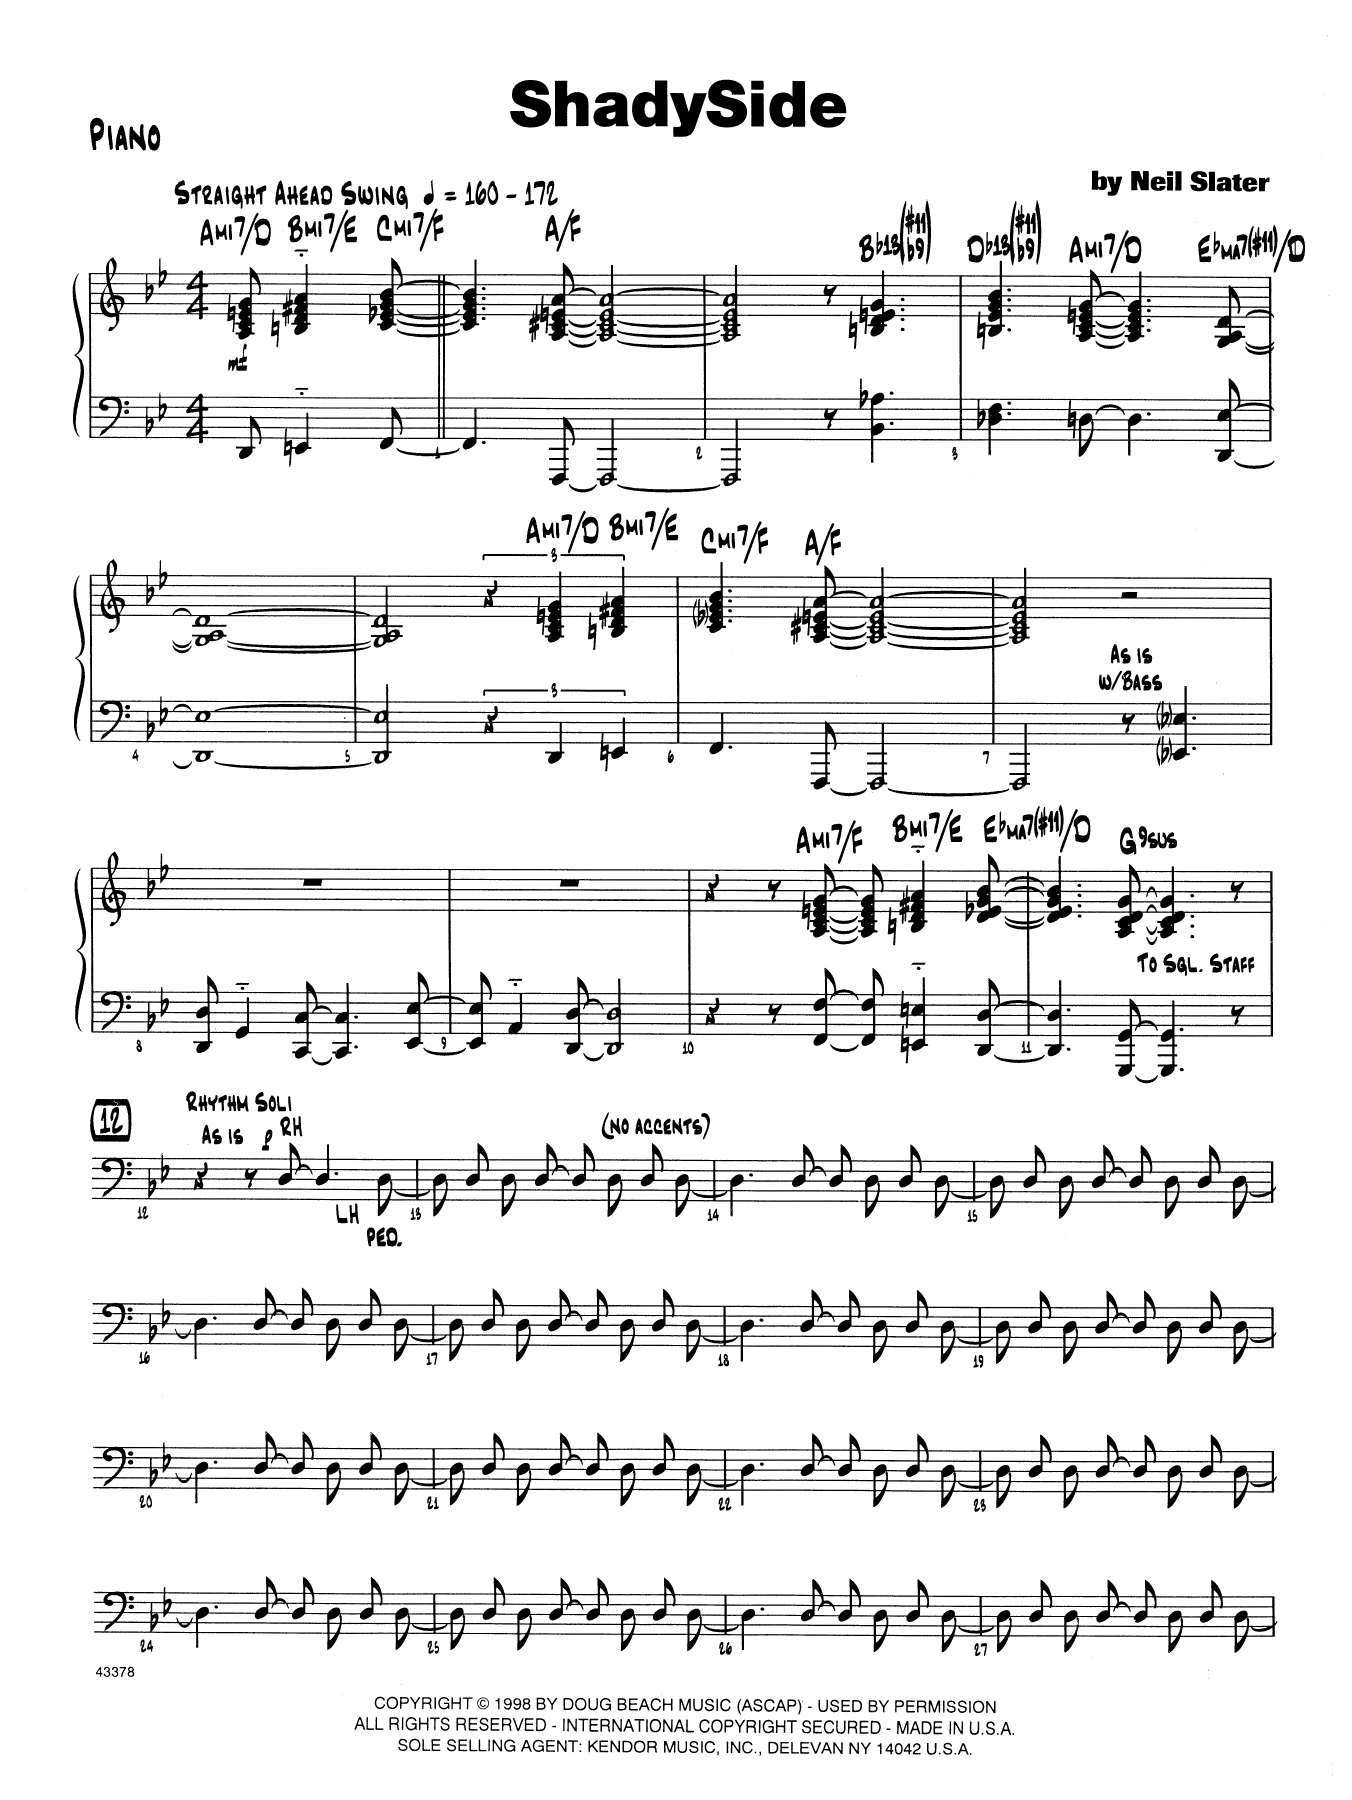 Download Neil Slater Shadyside - Piano Sheet Music